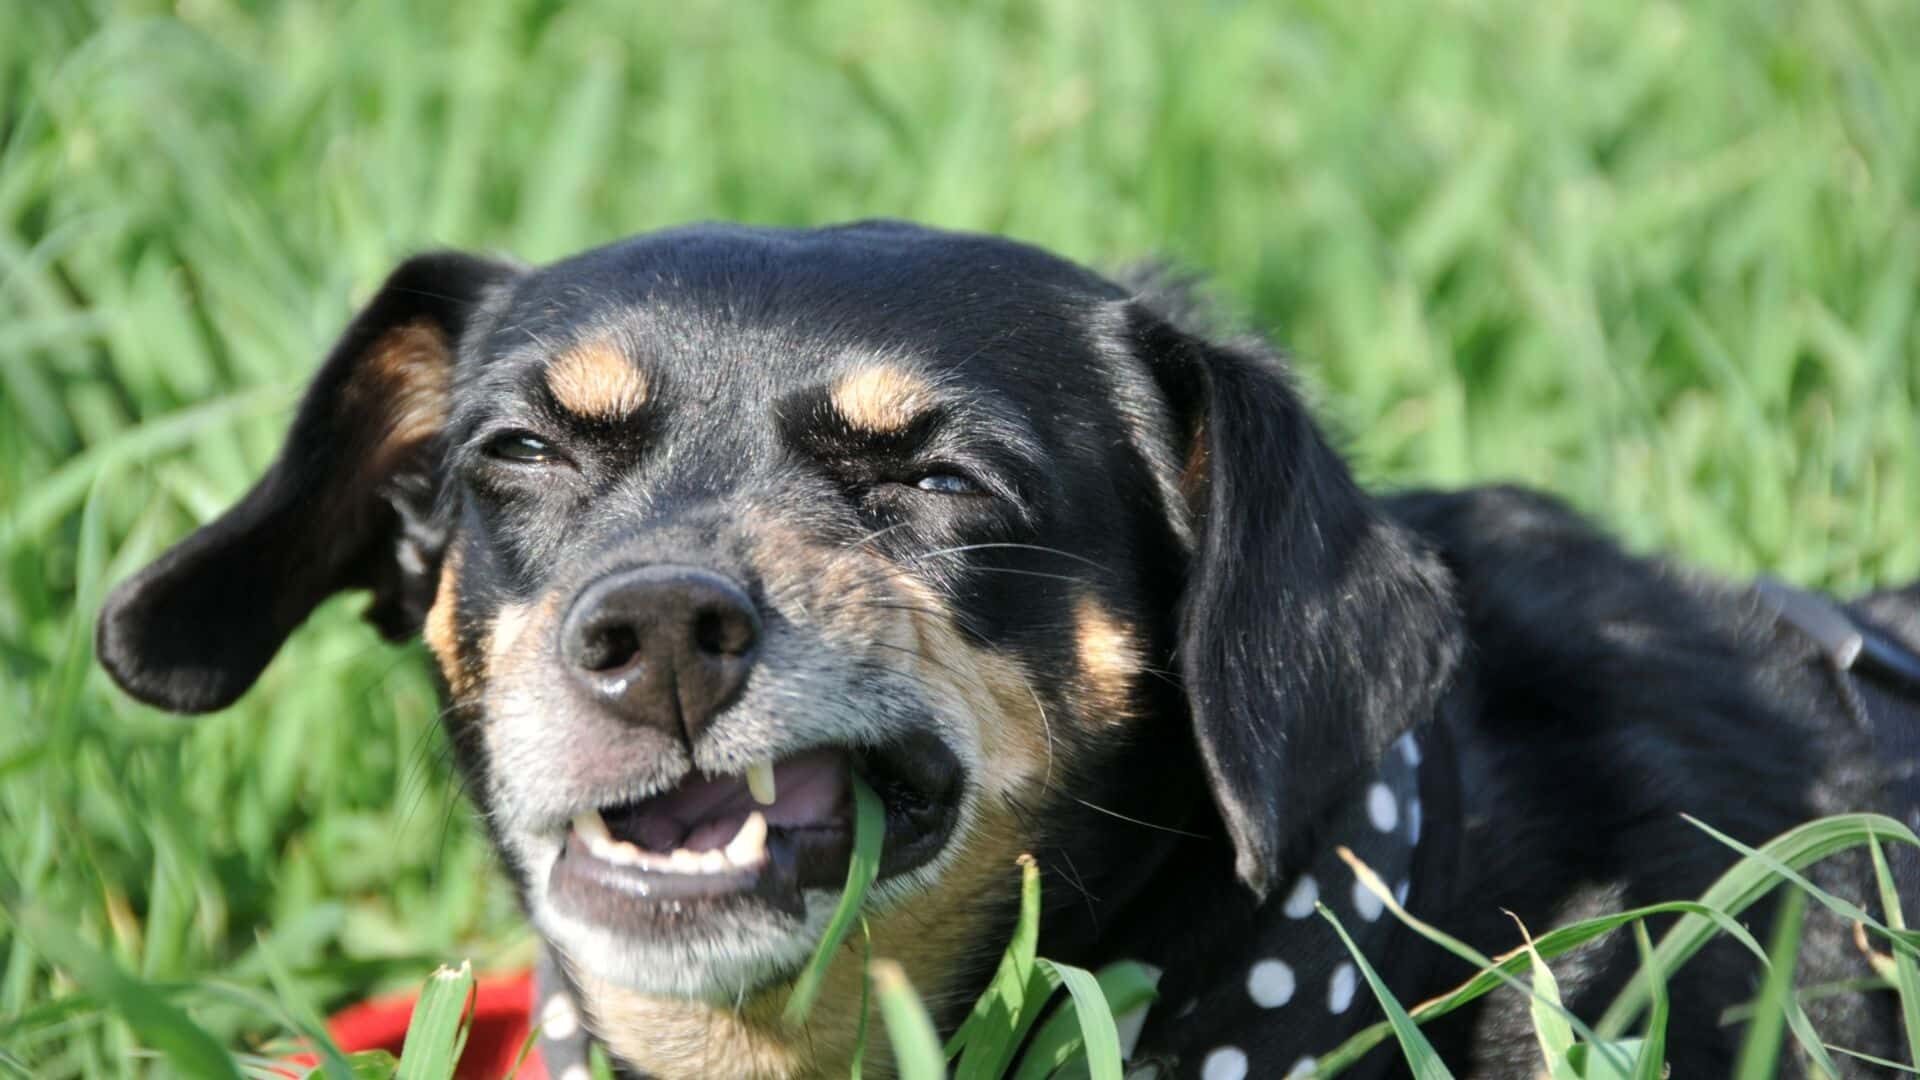 Dog suddenly eating grass like crazy